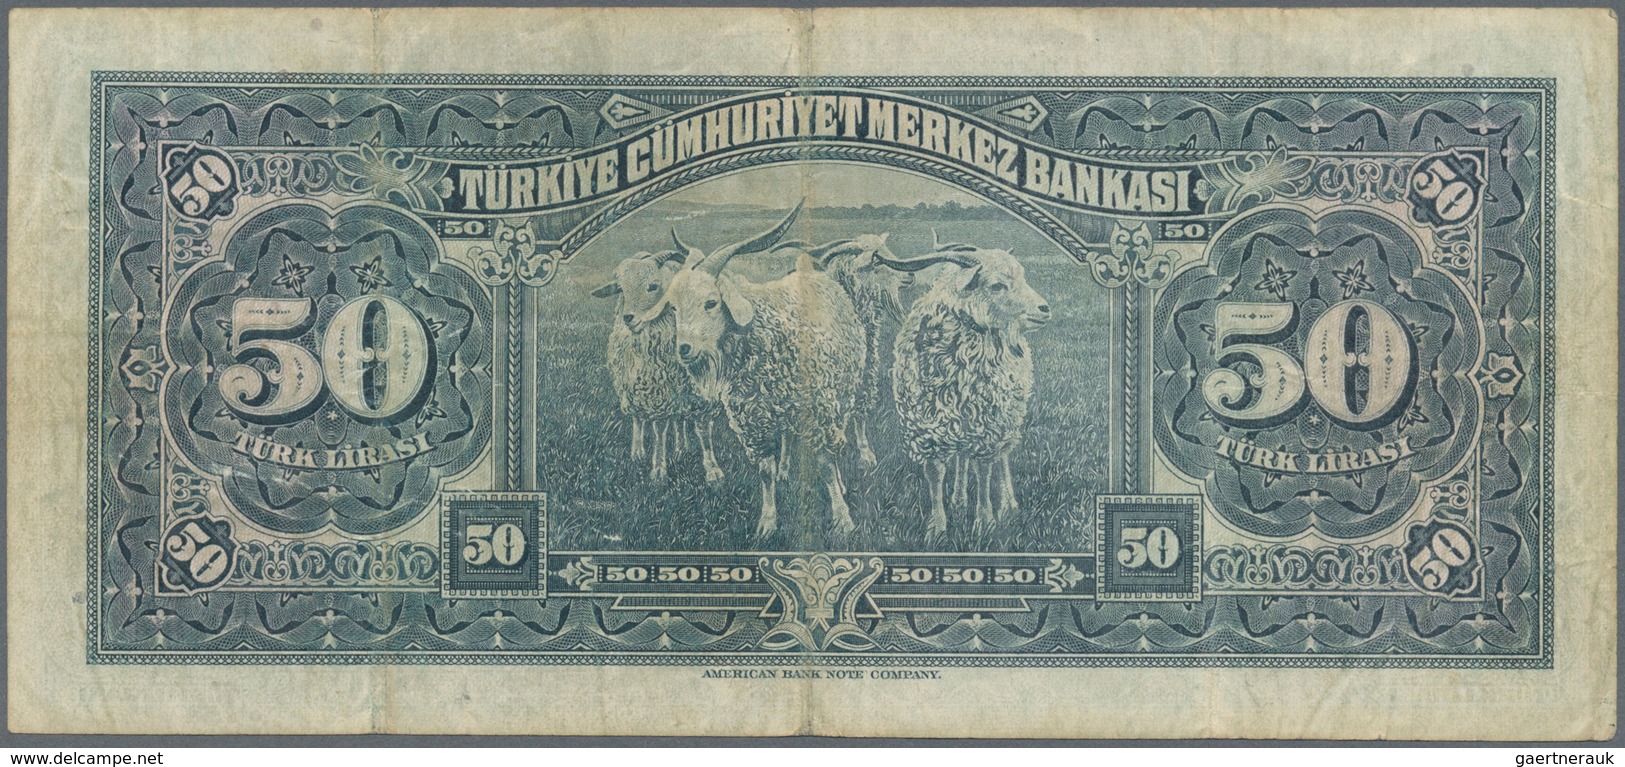 02536 Turkey / Türkei: 50 Lirasi L. 1930 (1942-1947) "?nönü" - 3rd Issue, P.143, Still A Nice Note With So - Turkey